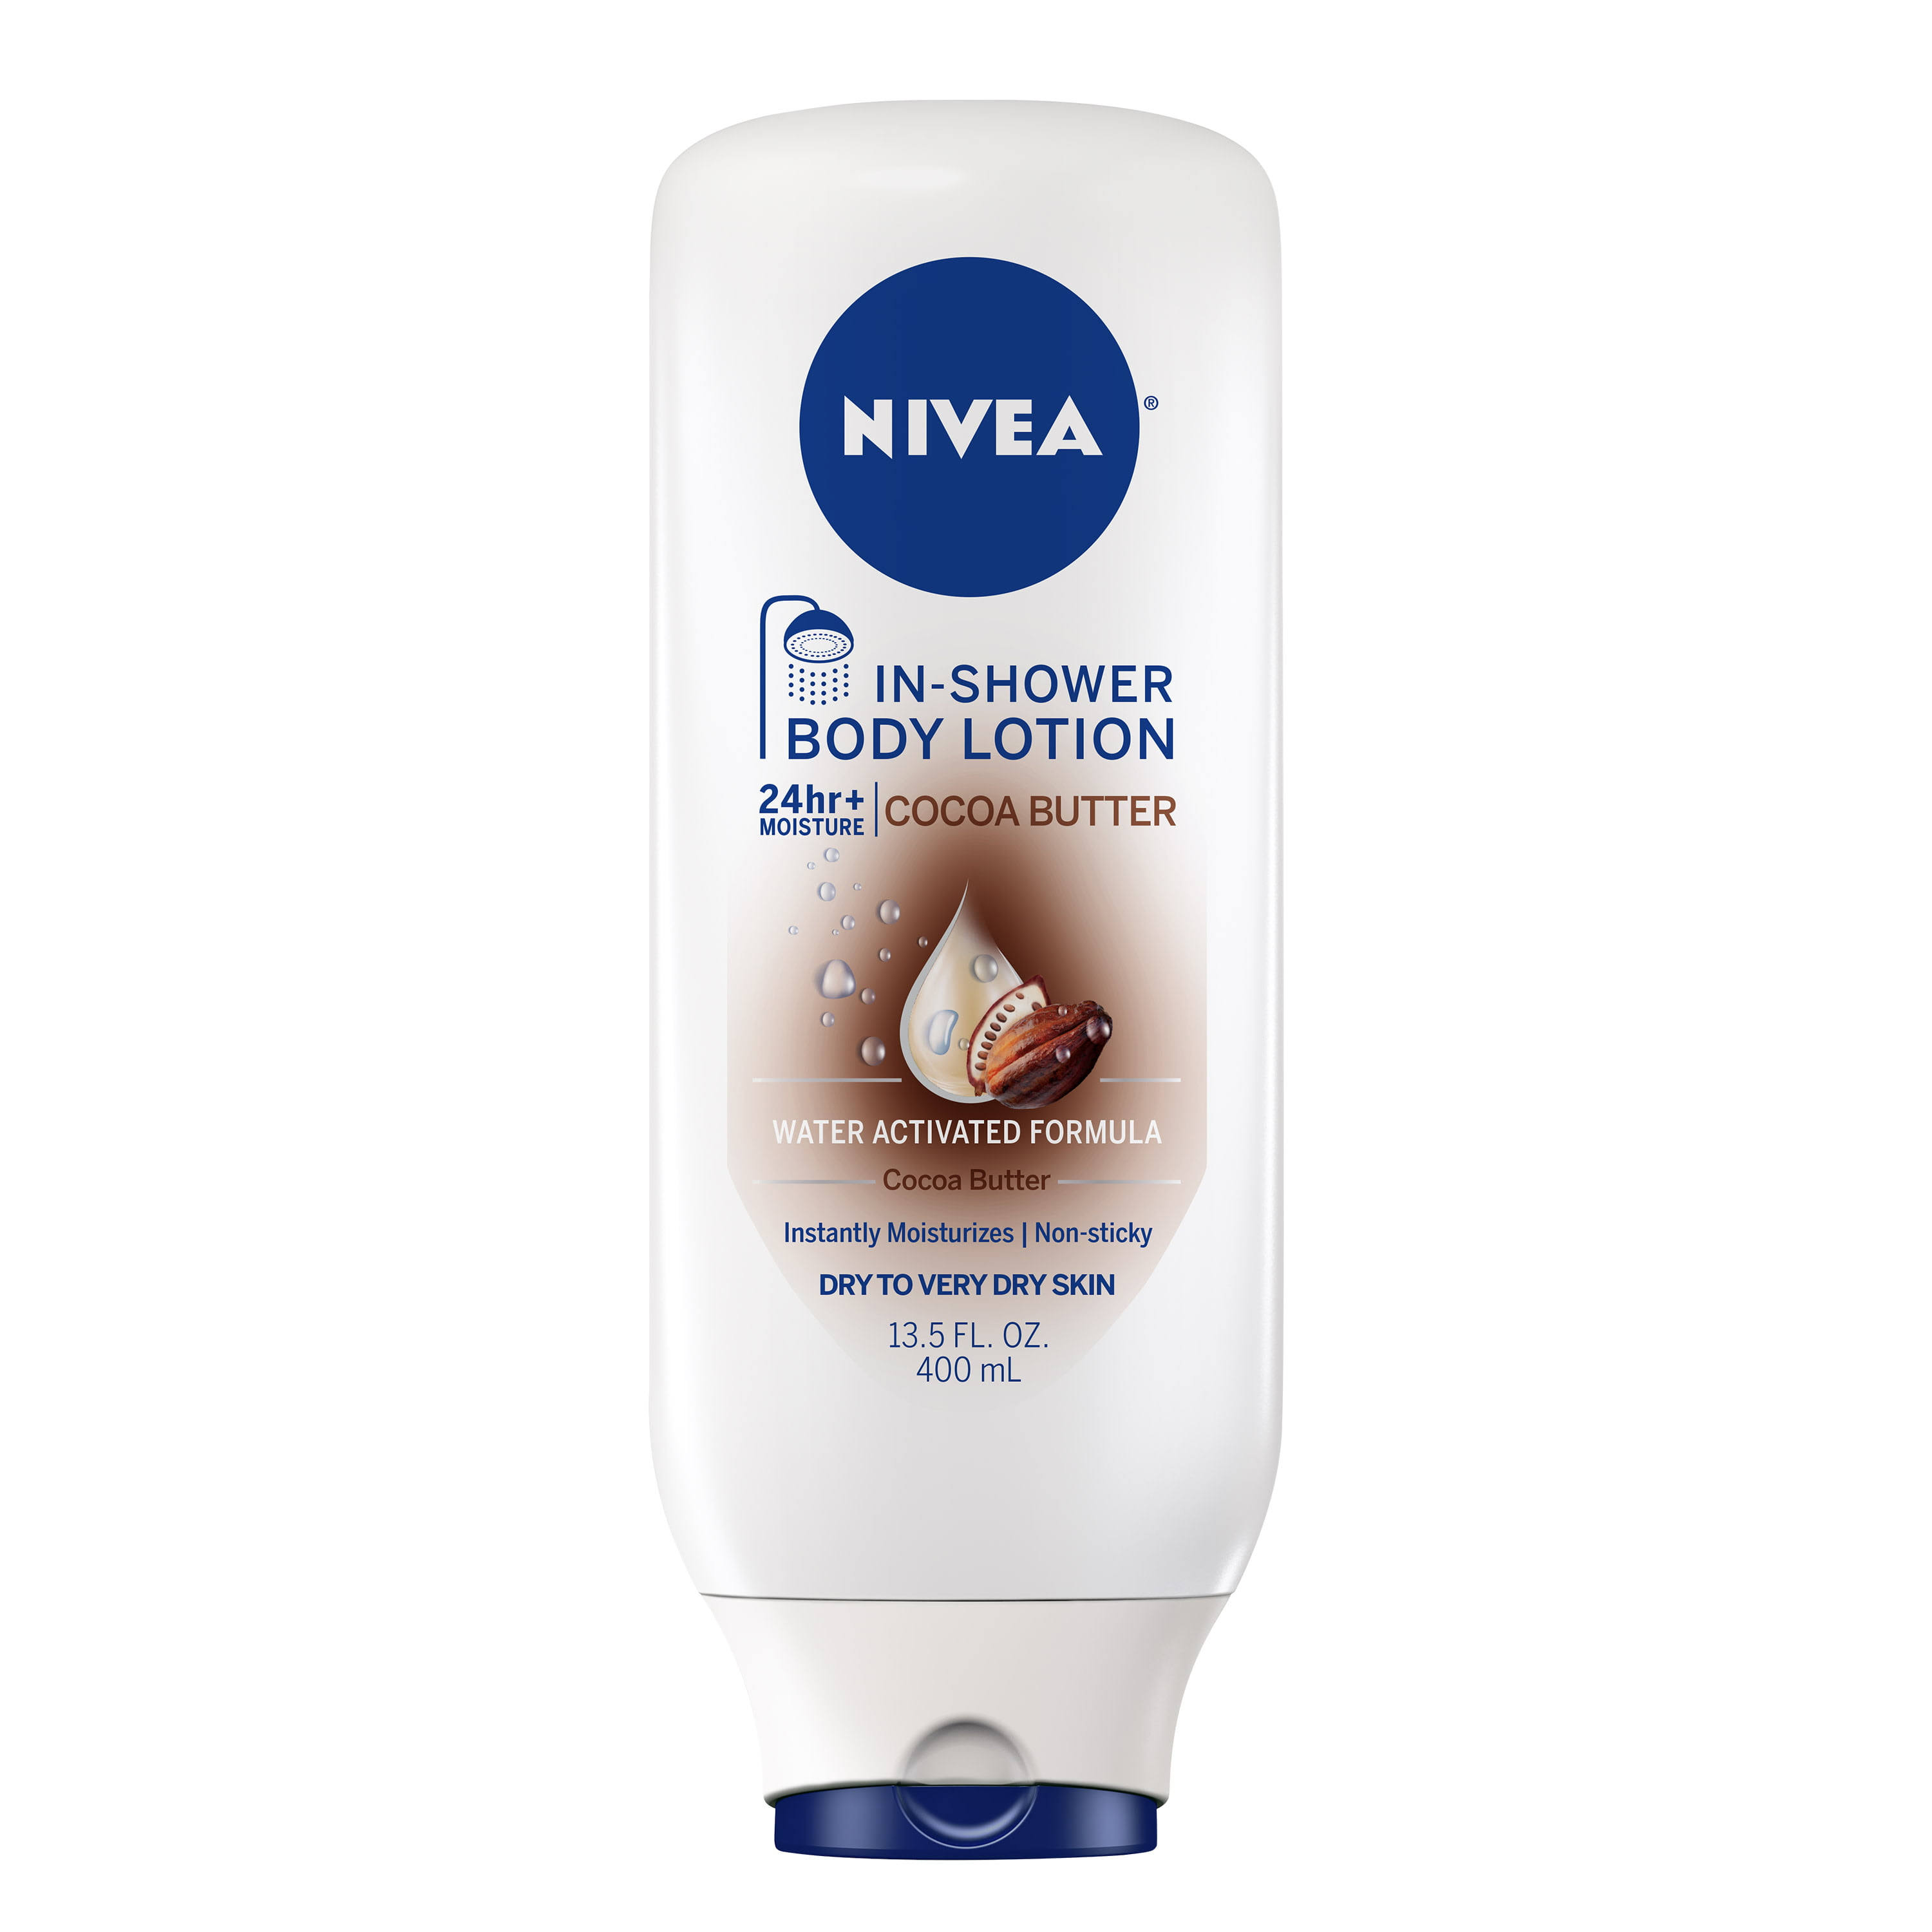 Nivea Cocoa Butter In-Shower Body Lotion - 13.5oz